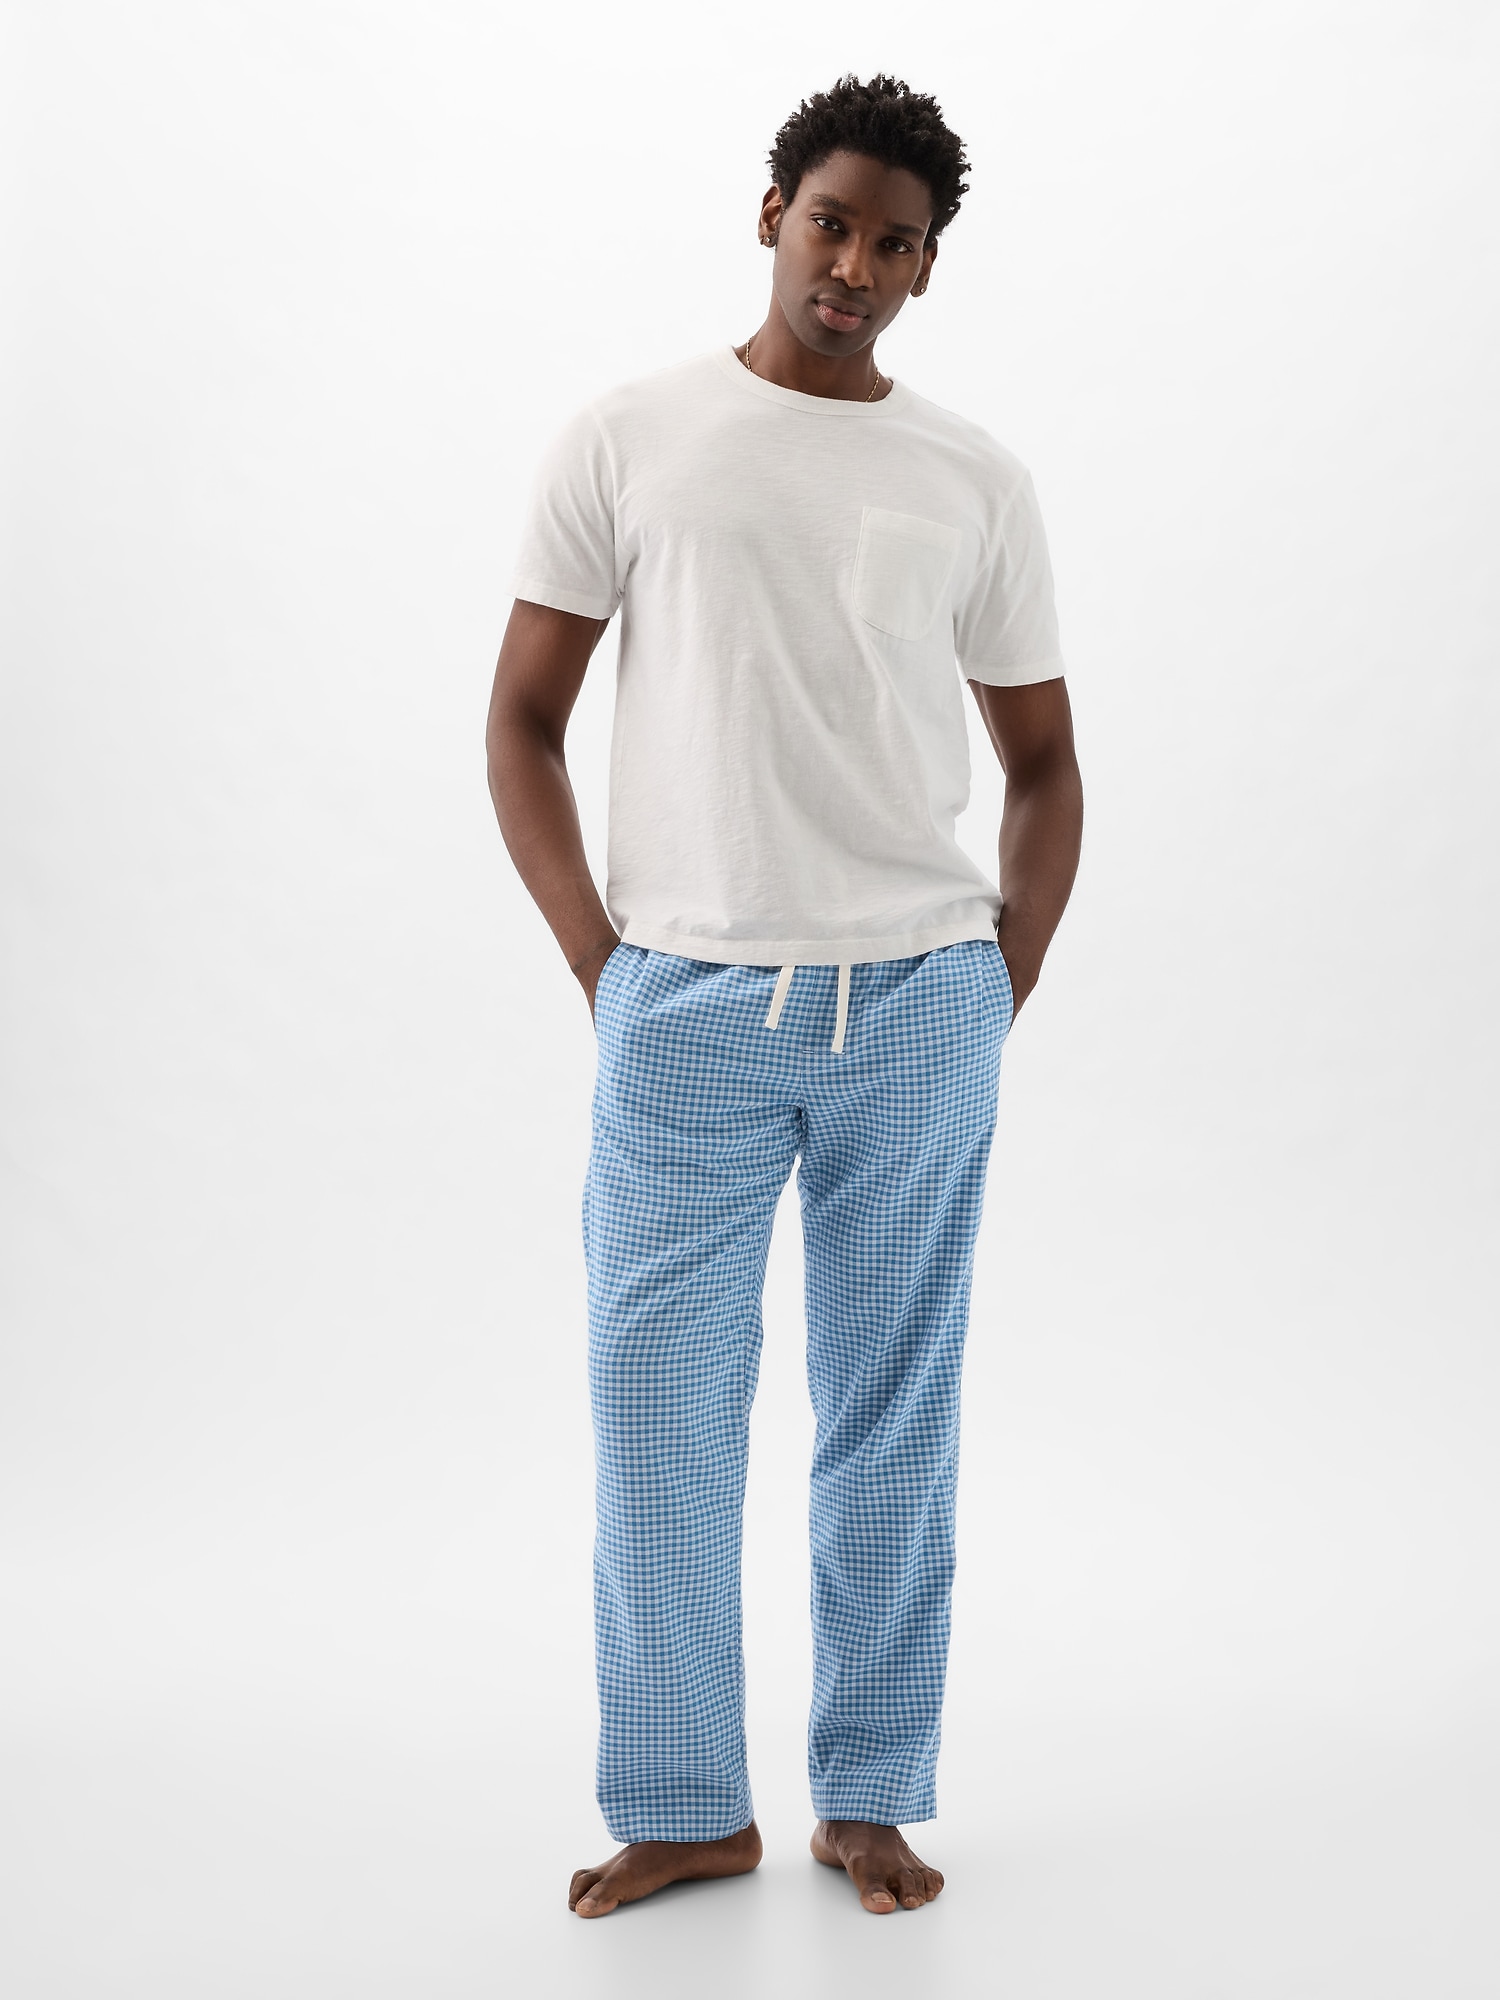 Blue Sweatpants For Men Mens Pajamas Plaid Pajama Pants Sleep Long Pant  With Pockets Soft Pj Bottoms Classic Home Wear Elastic Waist